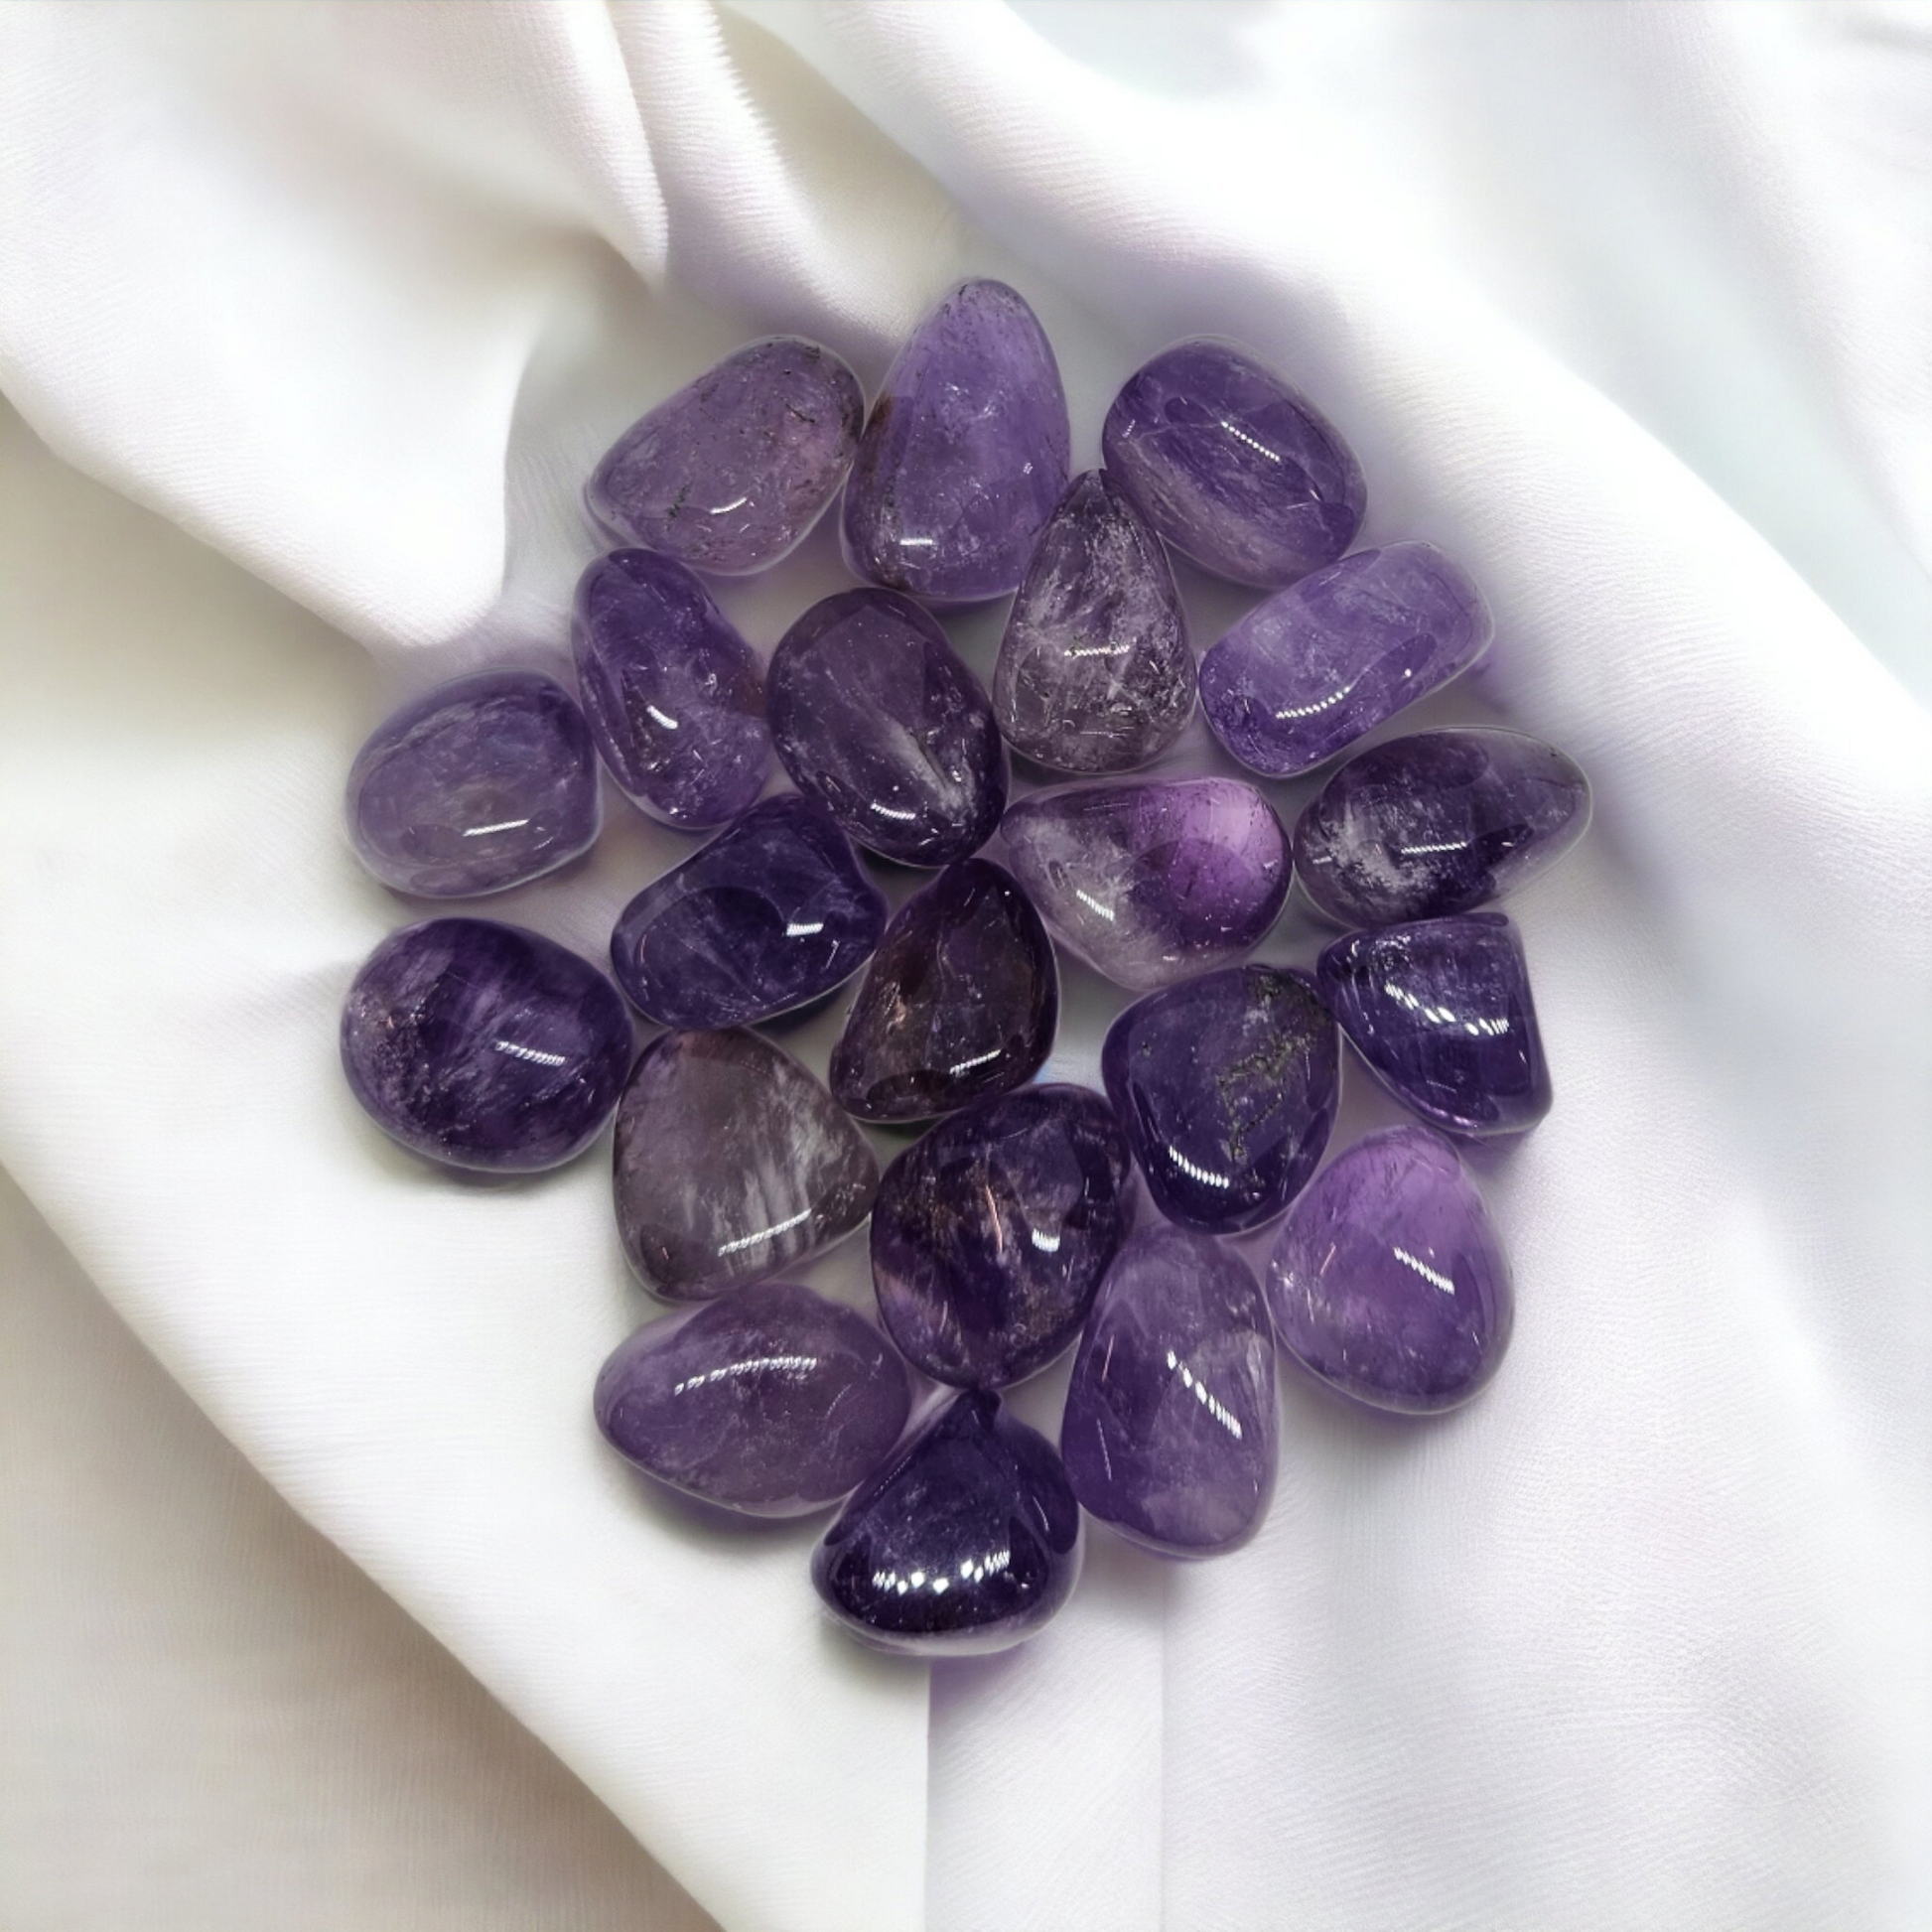 Amethyst crystal tumbles, sold at Mind Soul Sync crystal shop near Sydney Australia. Purple crystal.